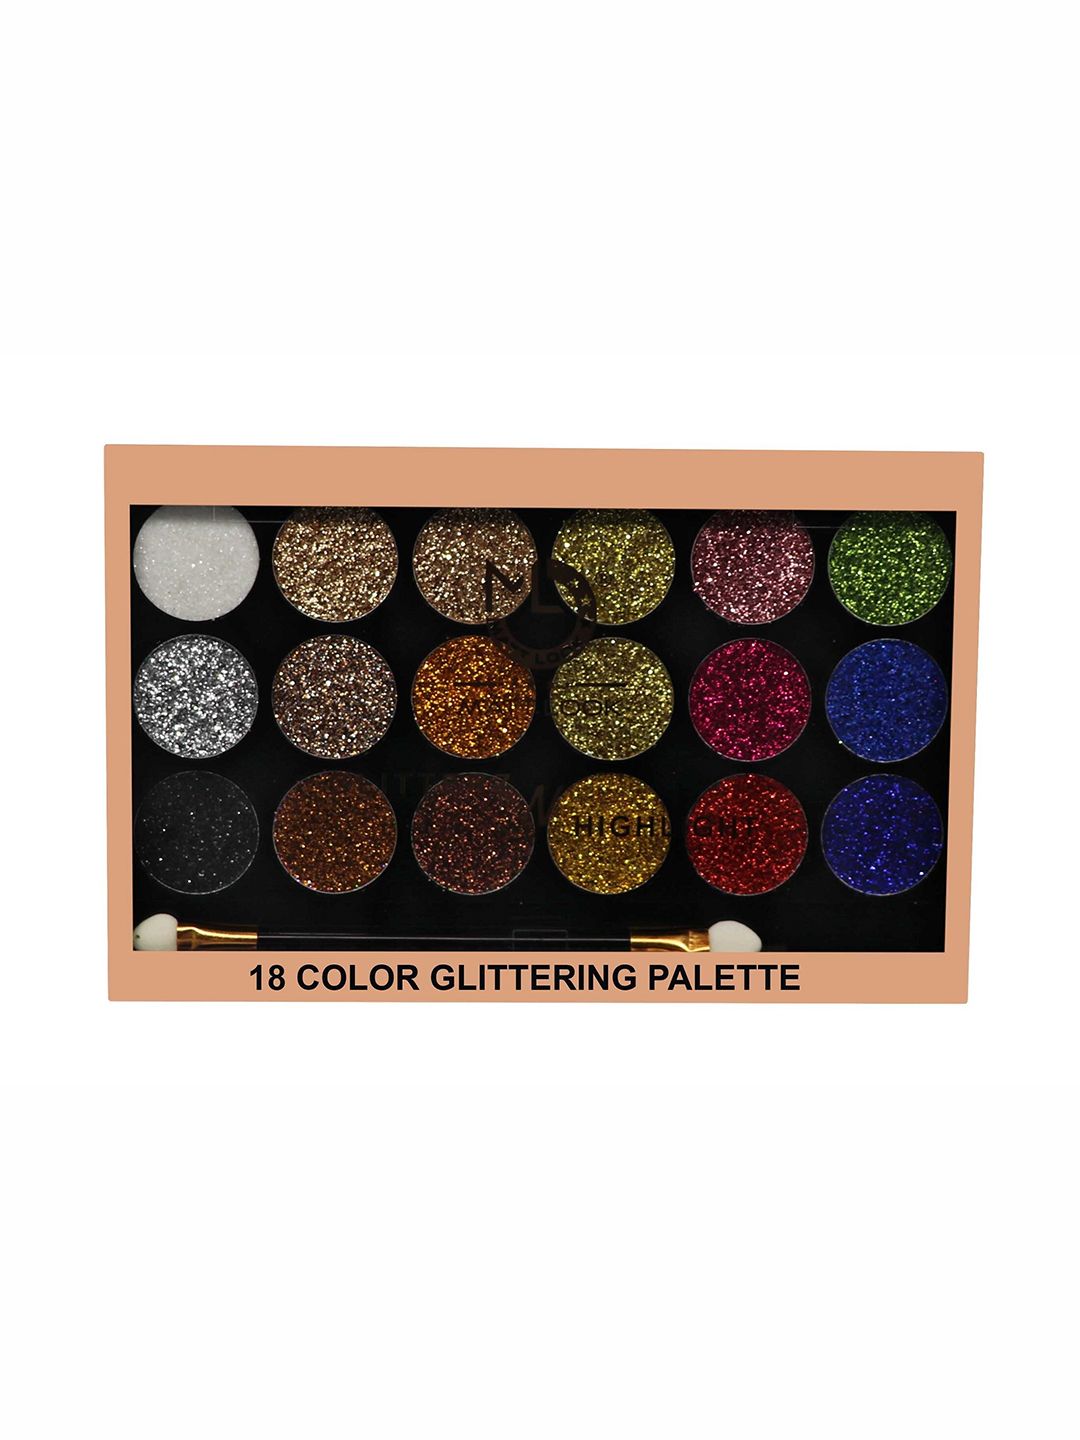 MATTLOOK Glitterz N Highlight 18 Colour Glittering Eyeshadow Palette, Unique Edition Price in India